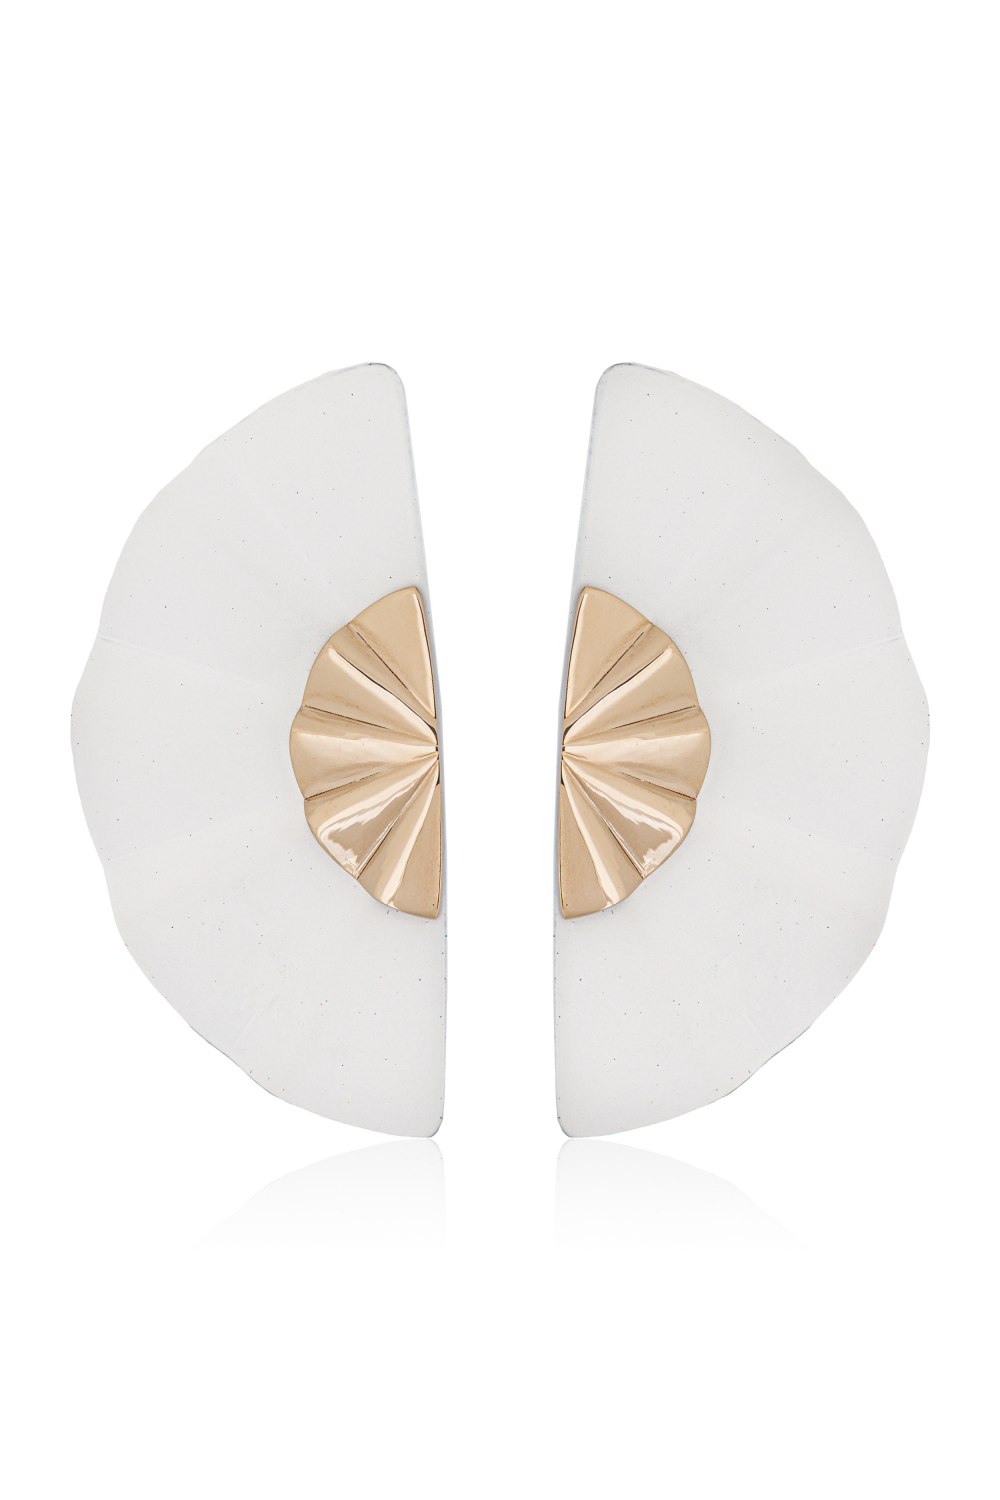 ANASTASIA KESSARIS - Golden Geisha White Titanium Earrings 